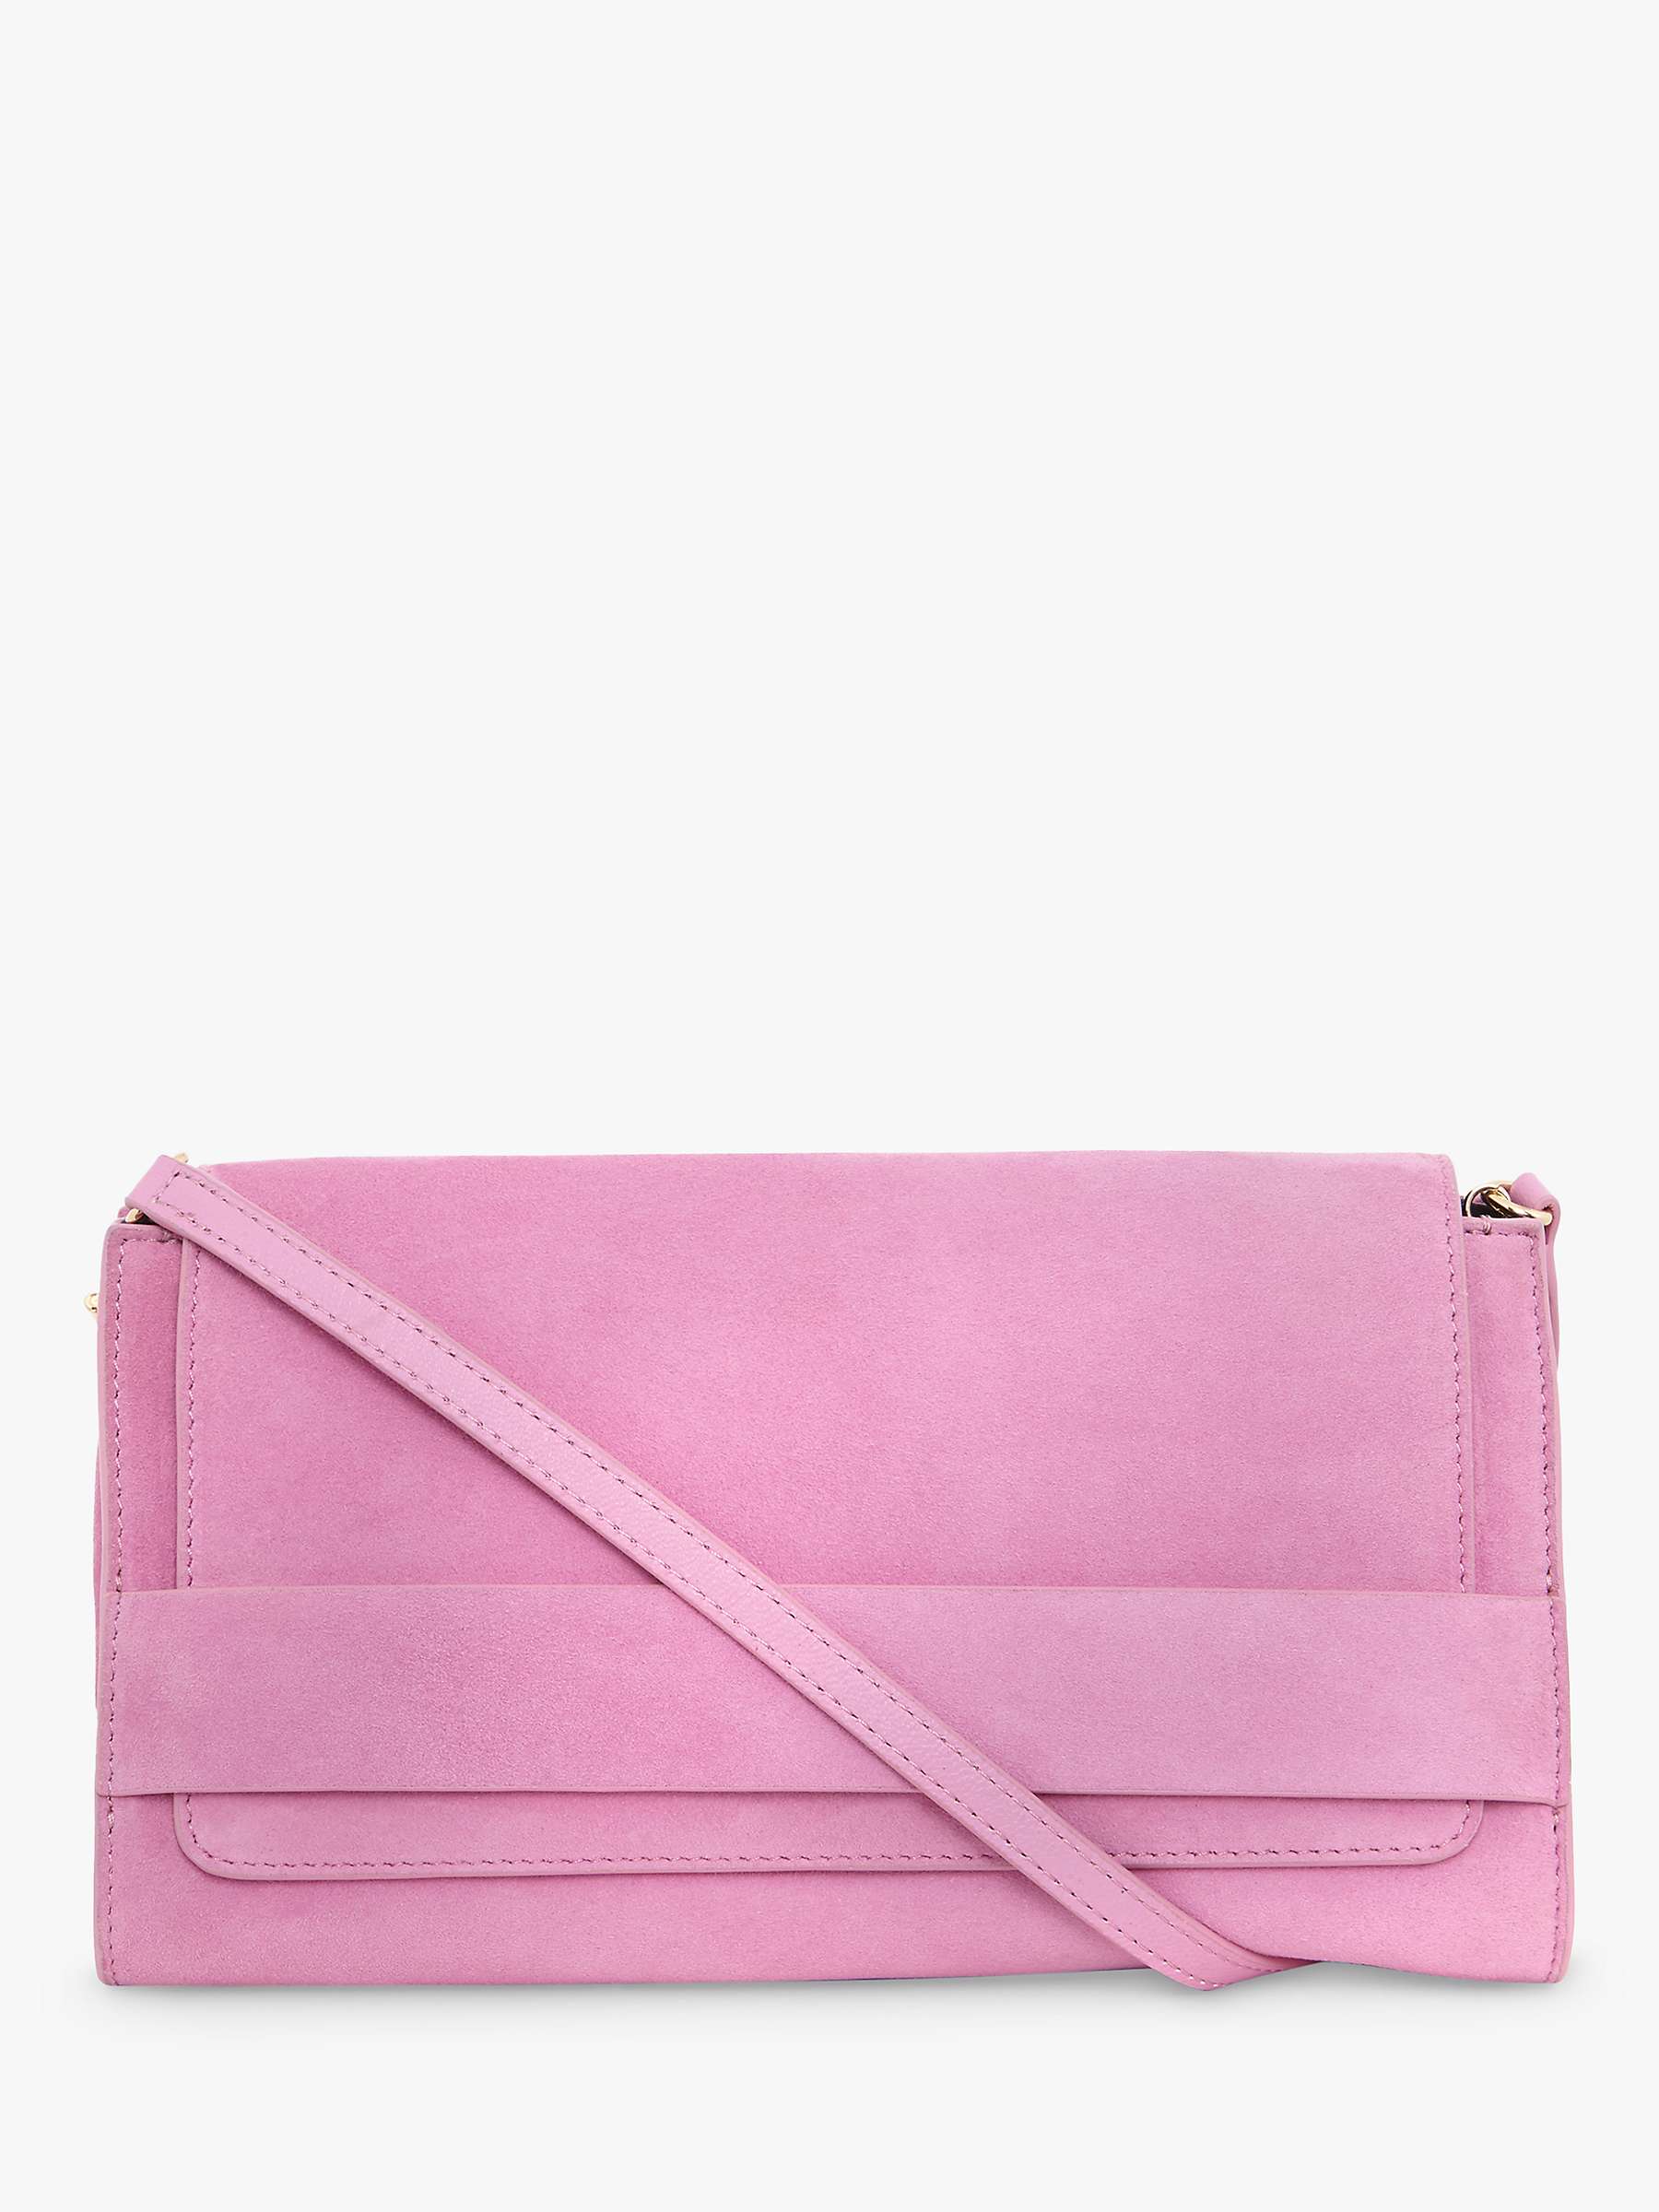 Buy Hobbs Cambridge Leather Clutch Bag, Carnation Pink Online at johnlewis.com